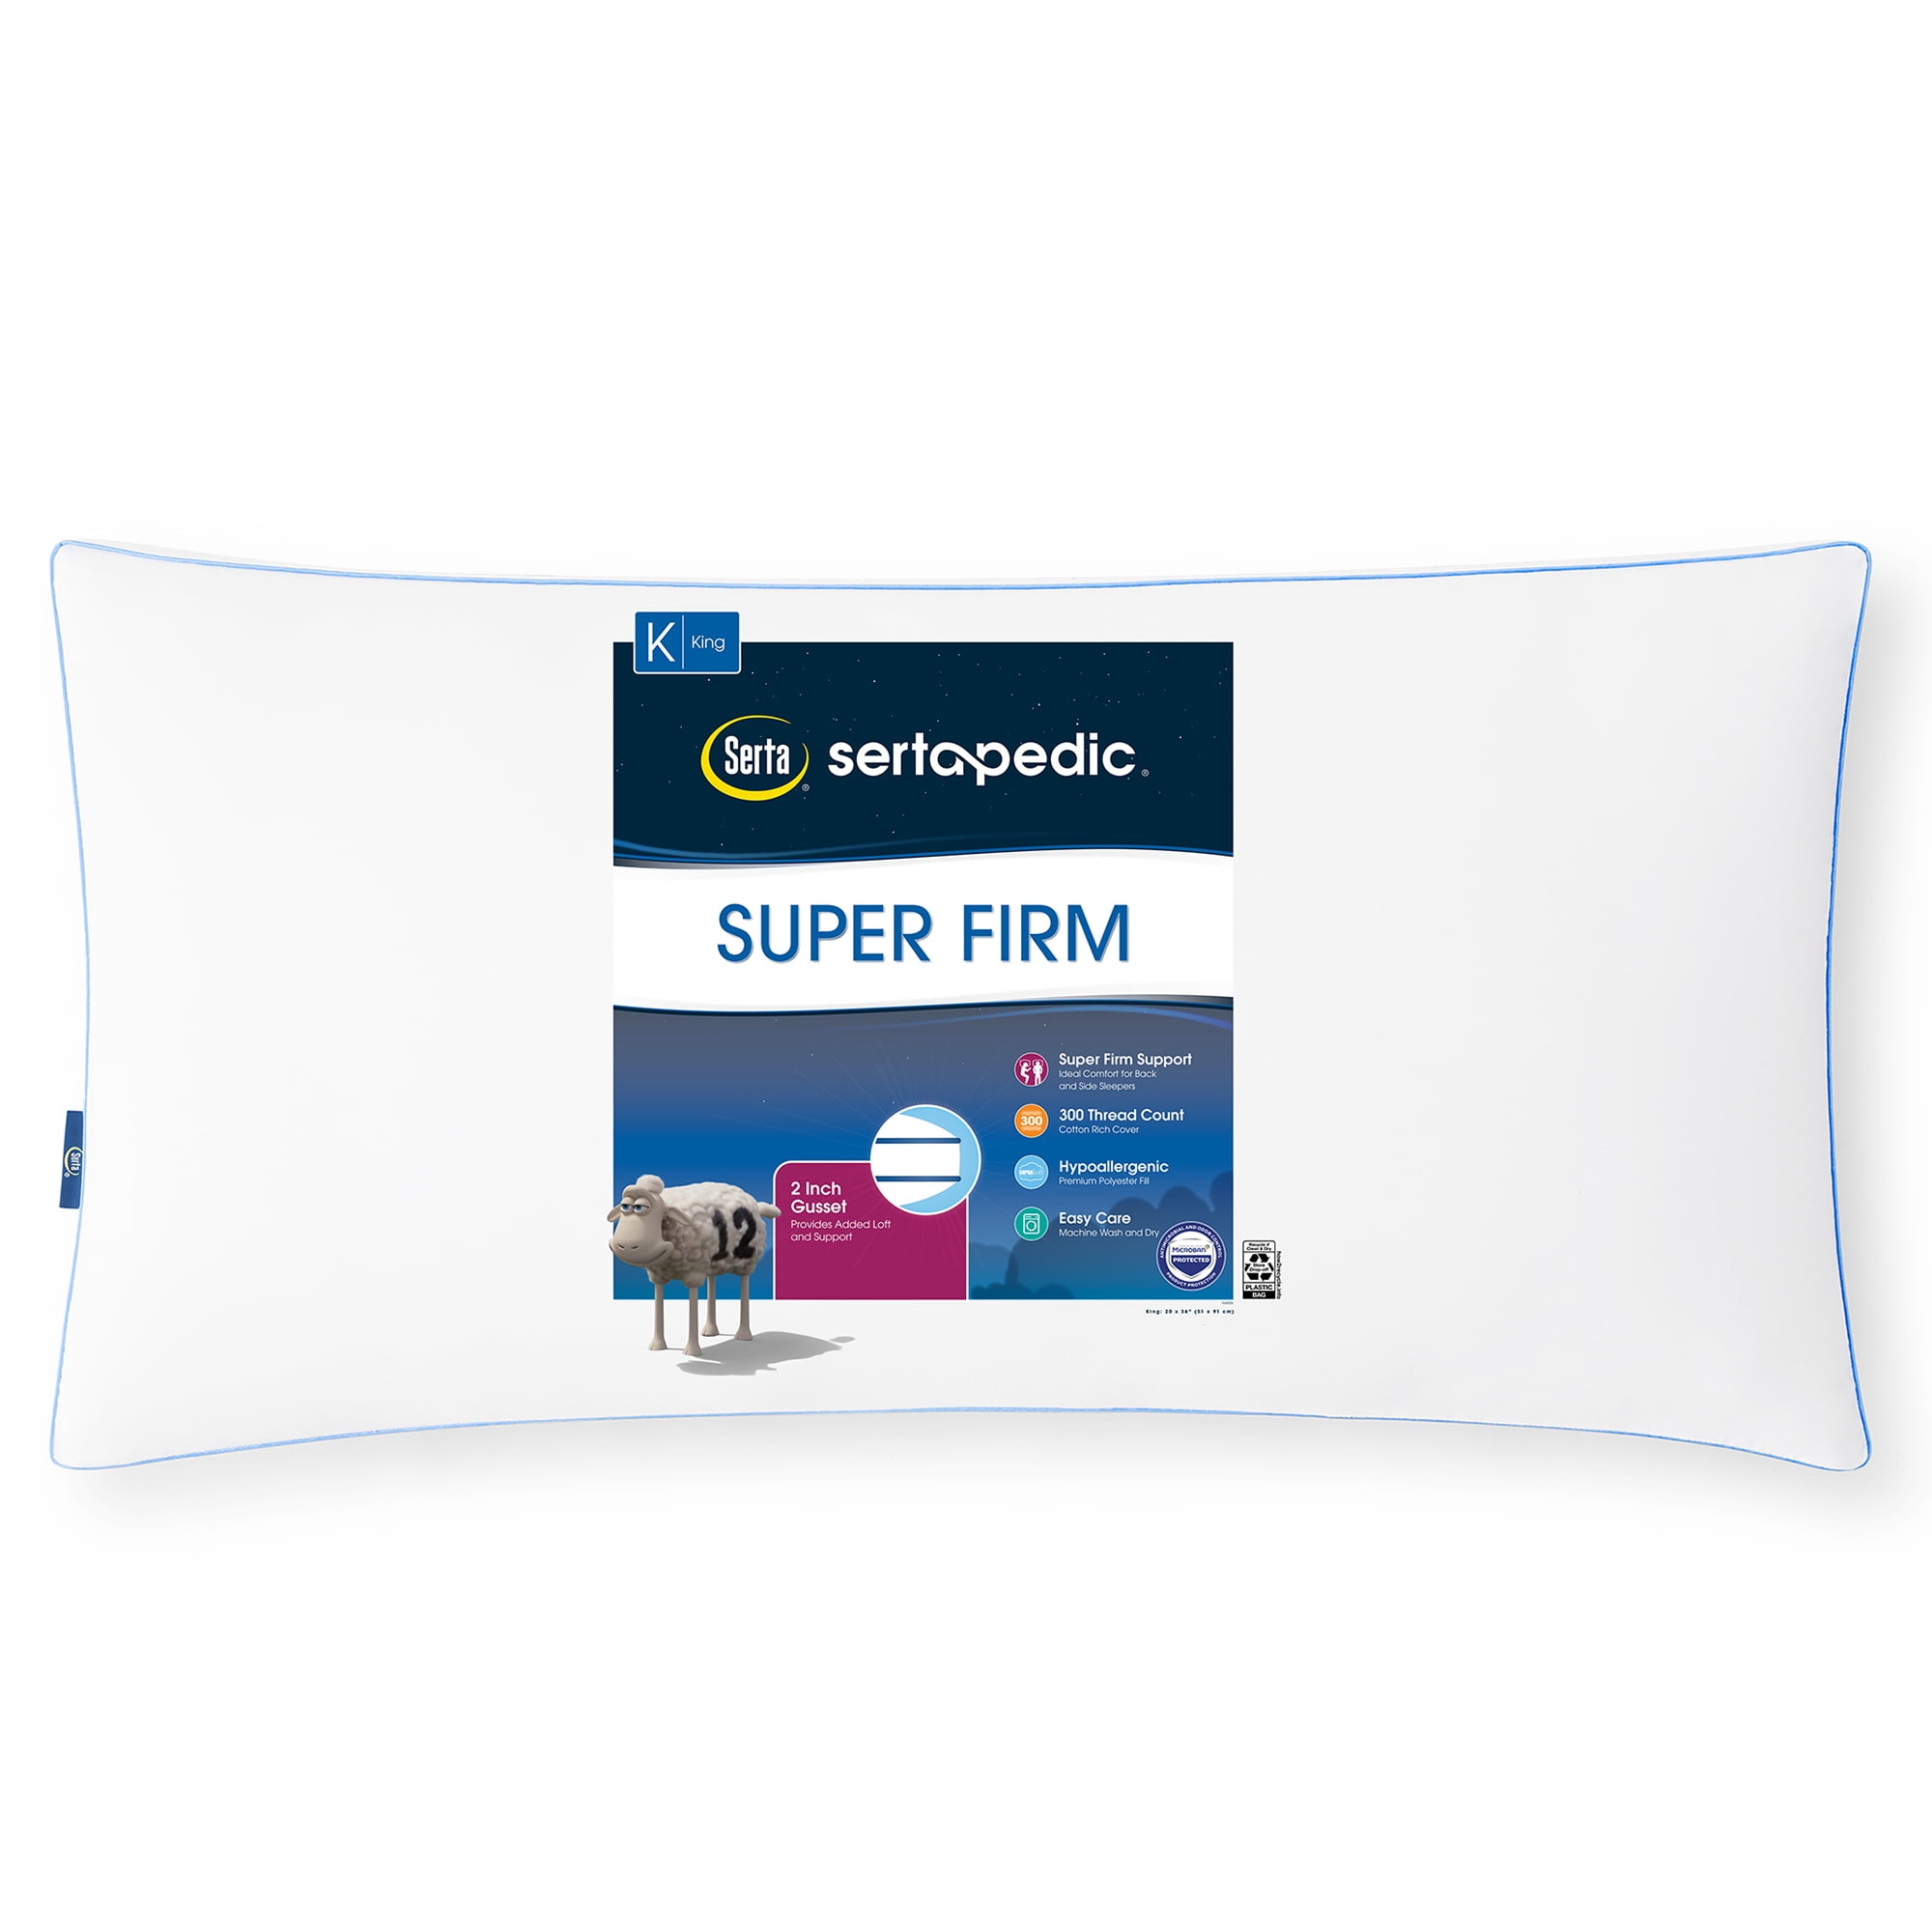 Sertapedic Super Firm Bed Pillow, King